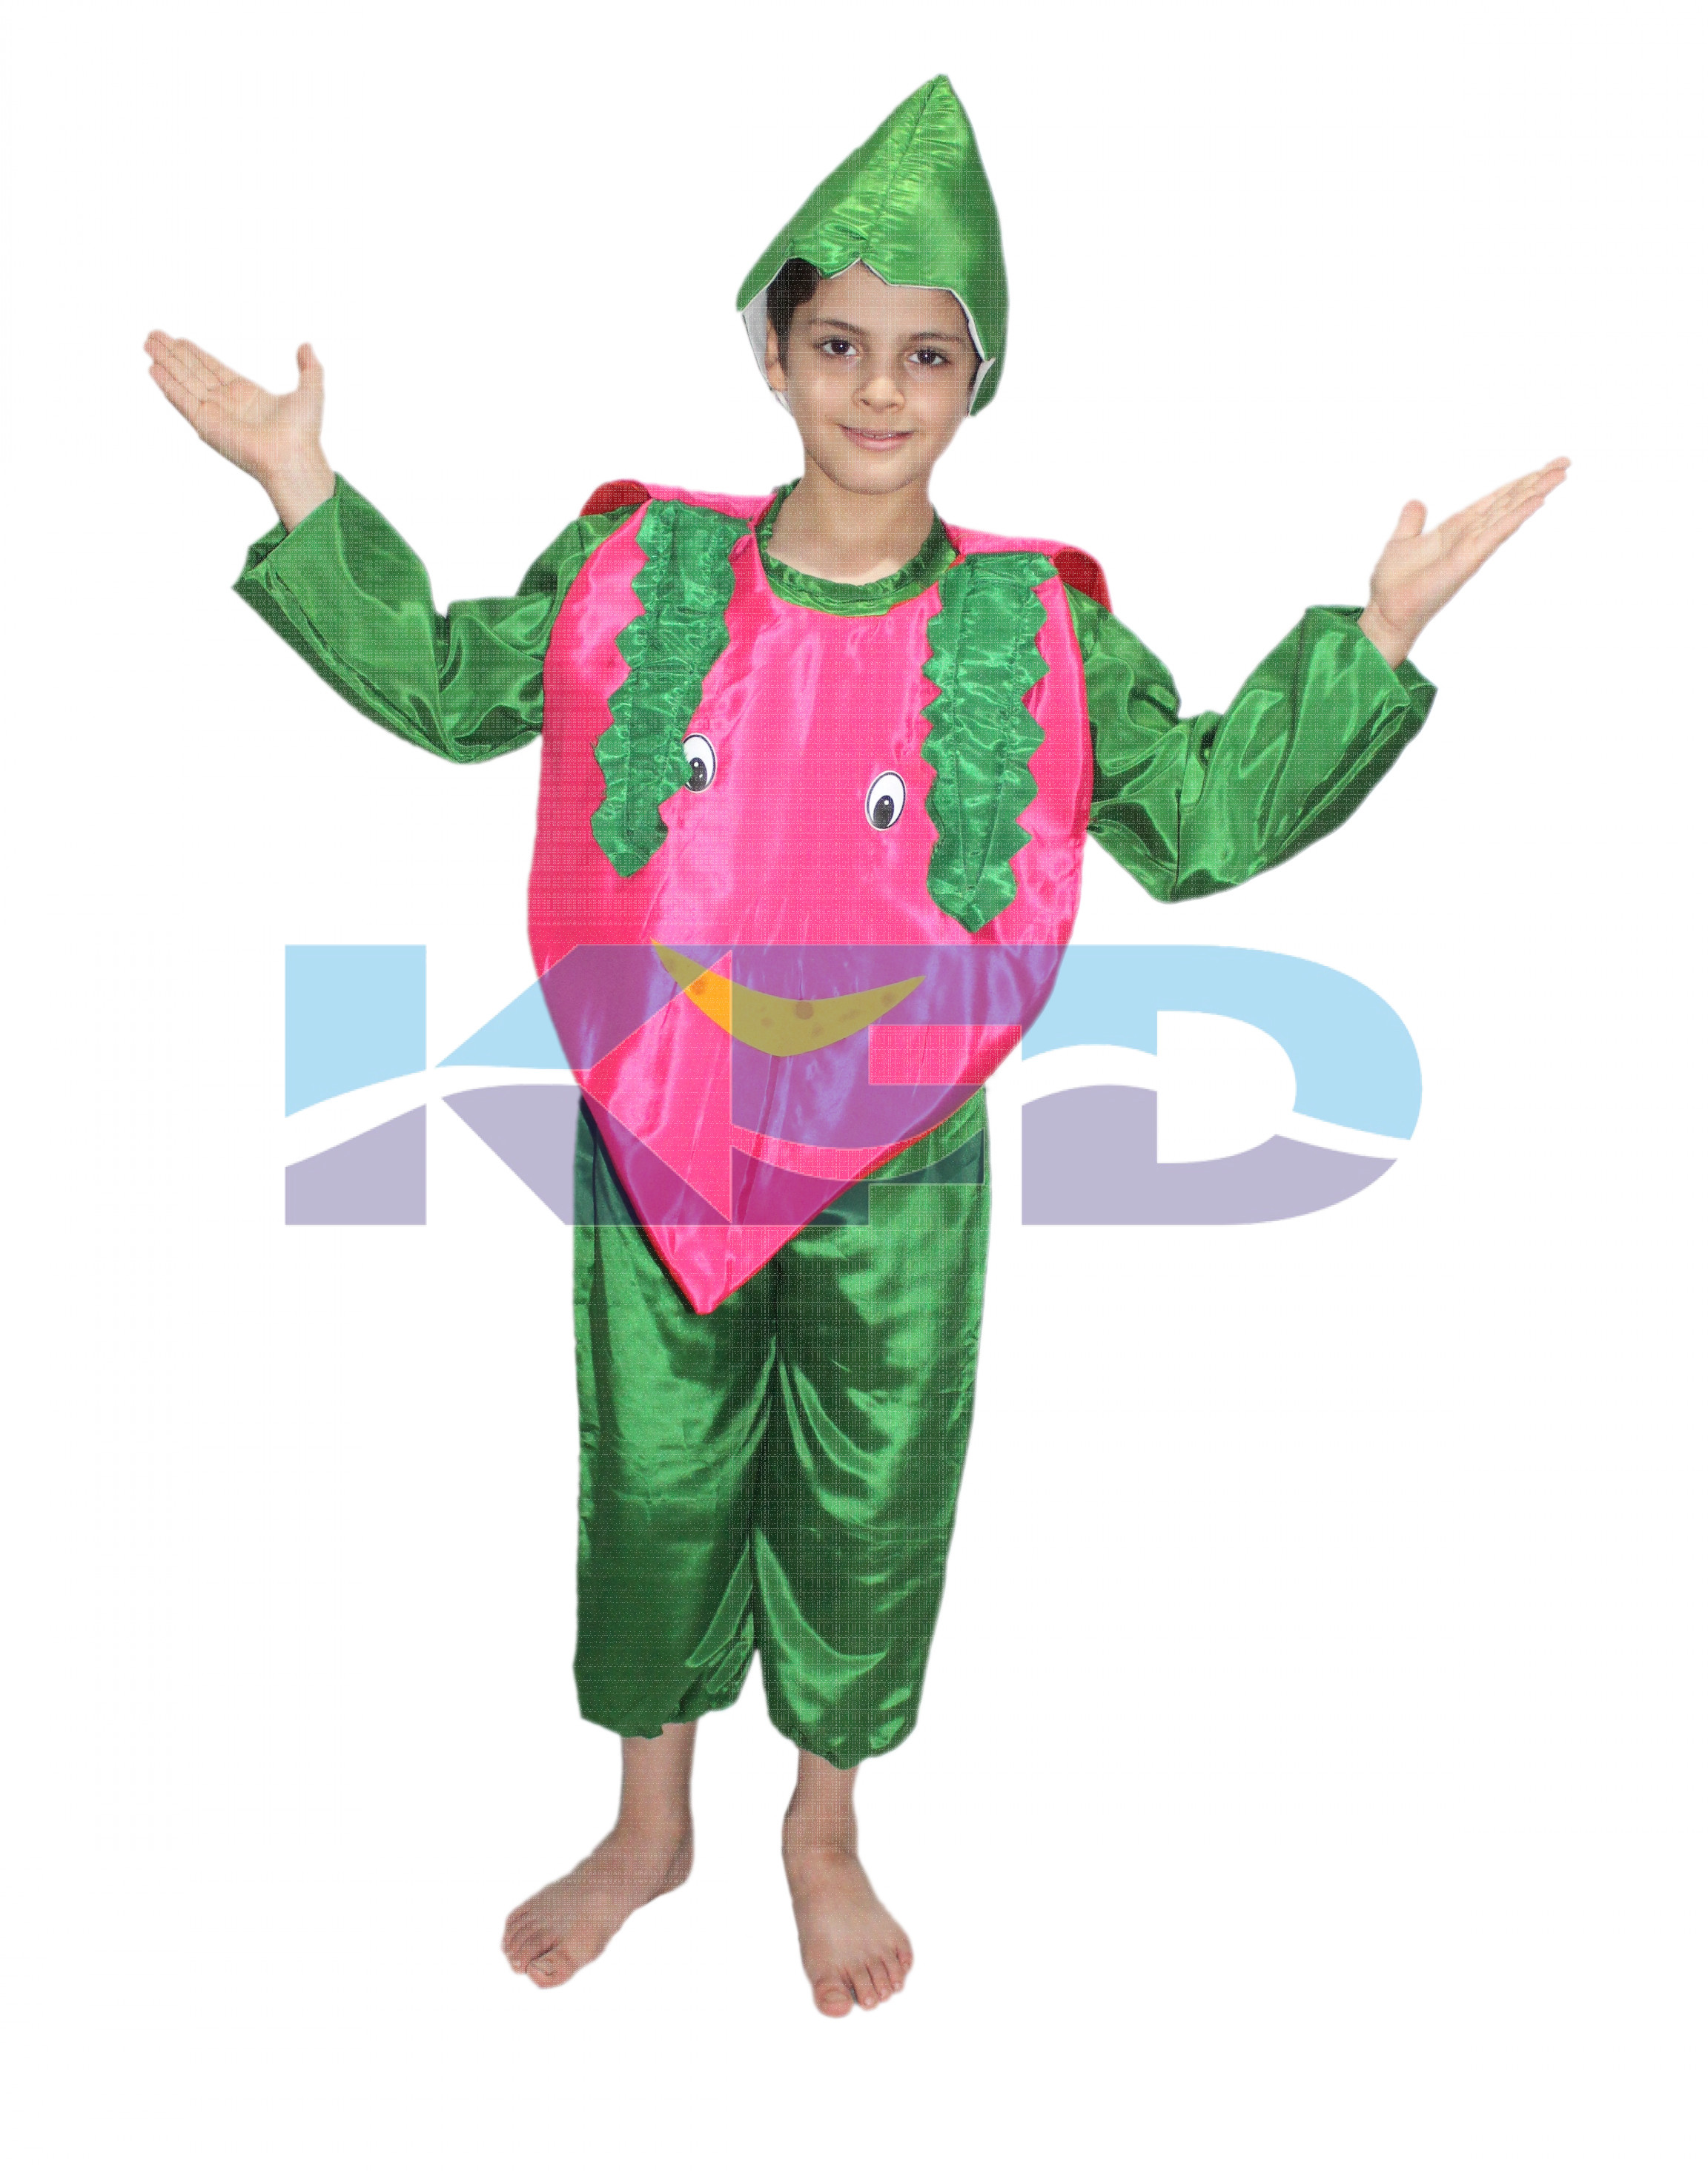 DEWS - The School, Panchkula: Miss & Master Green - Fancy Dress Competition  - Vegetable theme - Personality Development Activity | DEWS - The School |  Playschool | Sec 21 Panchkula